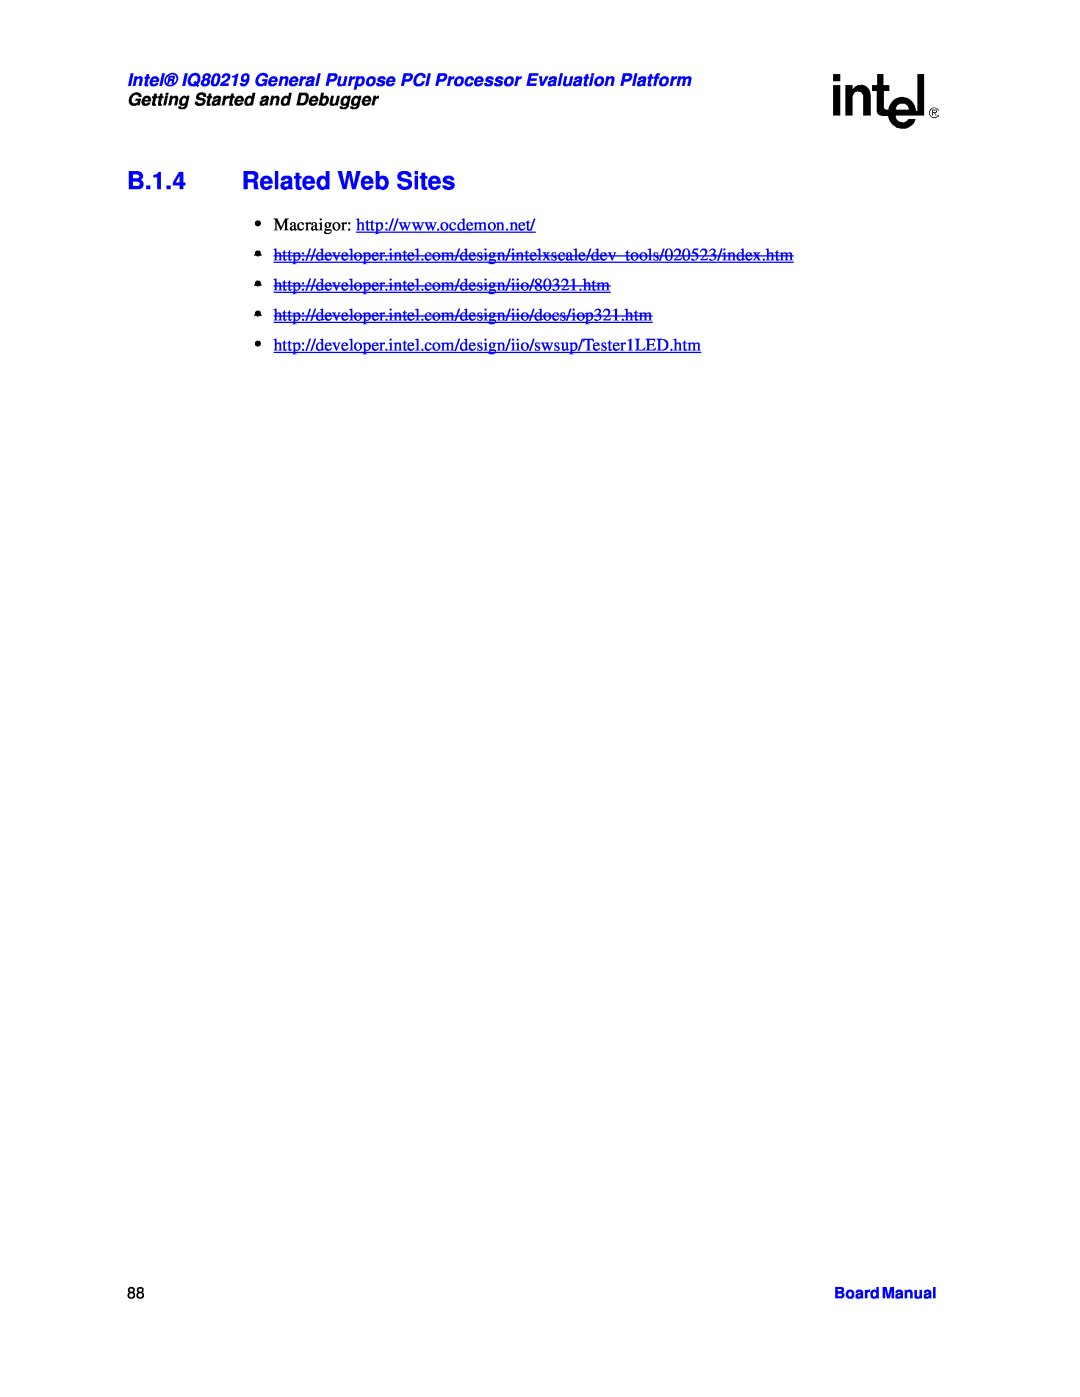 Intel IQ80219 manual B.1.4 Related Web Sites, Board Manual 